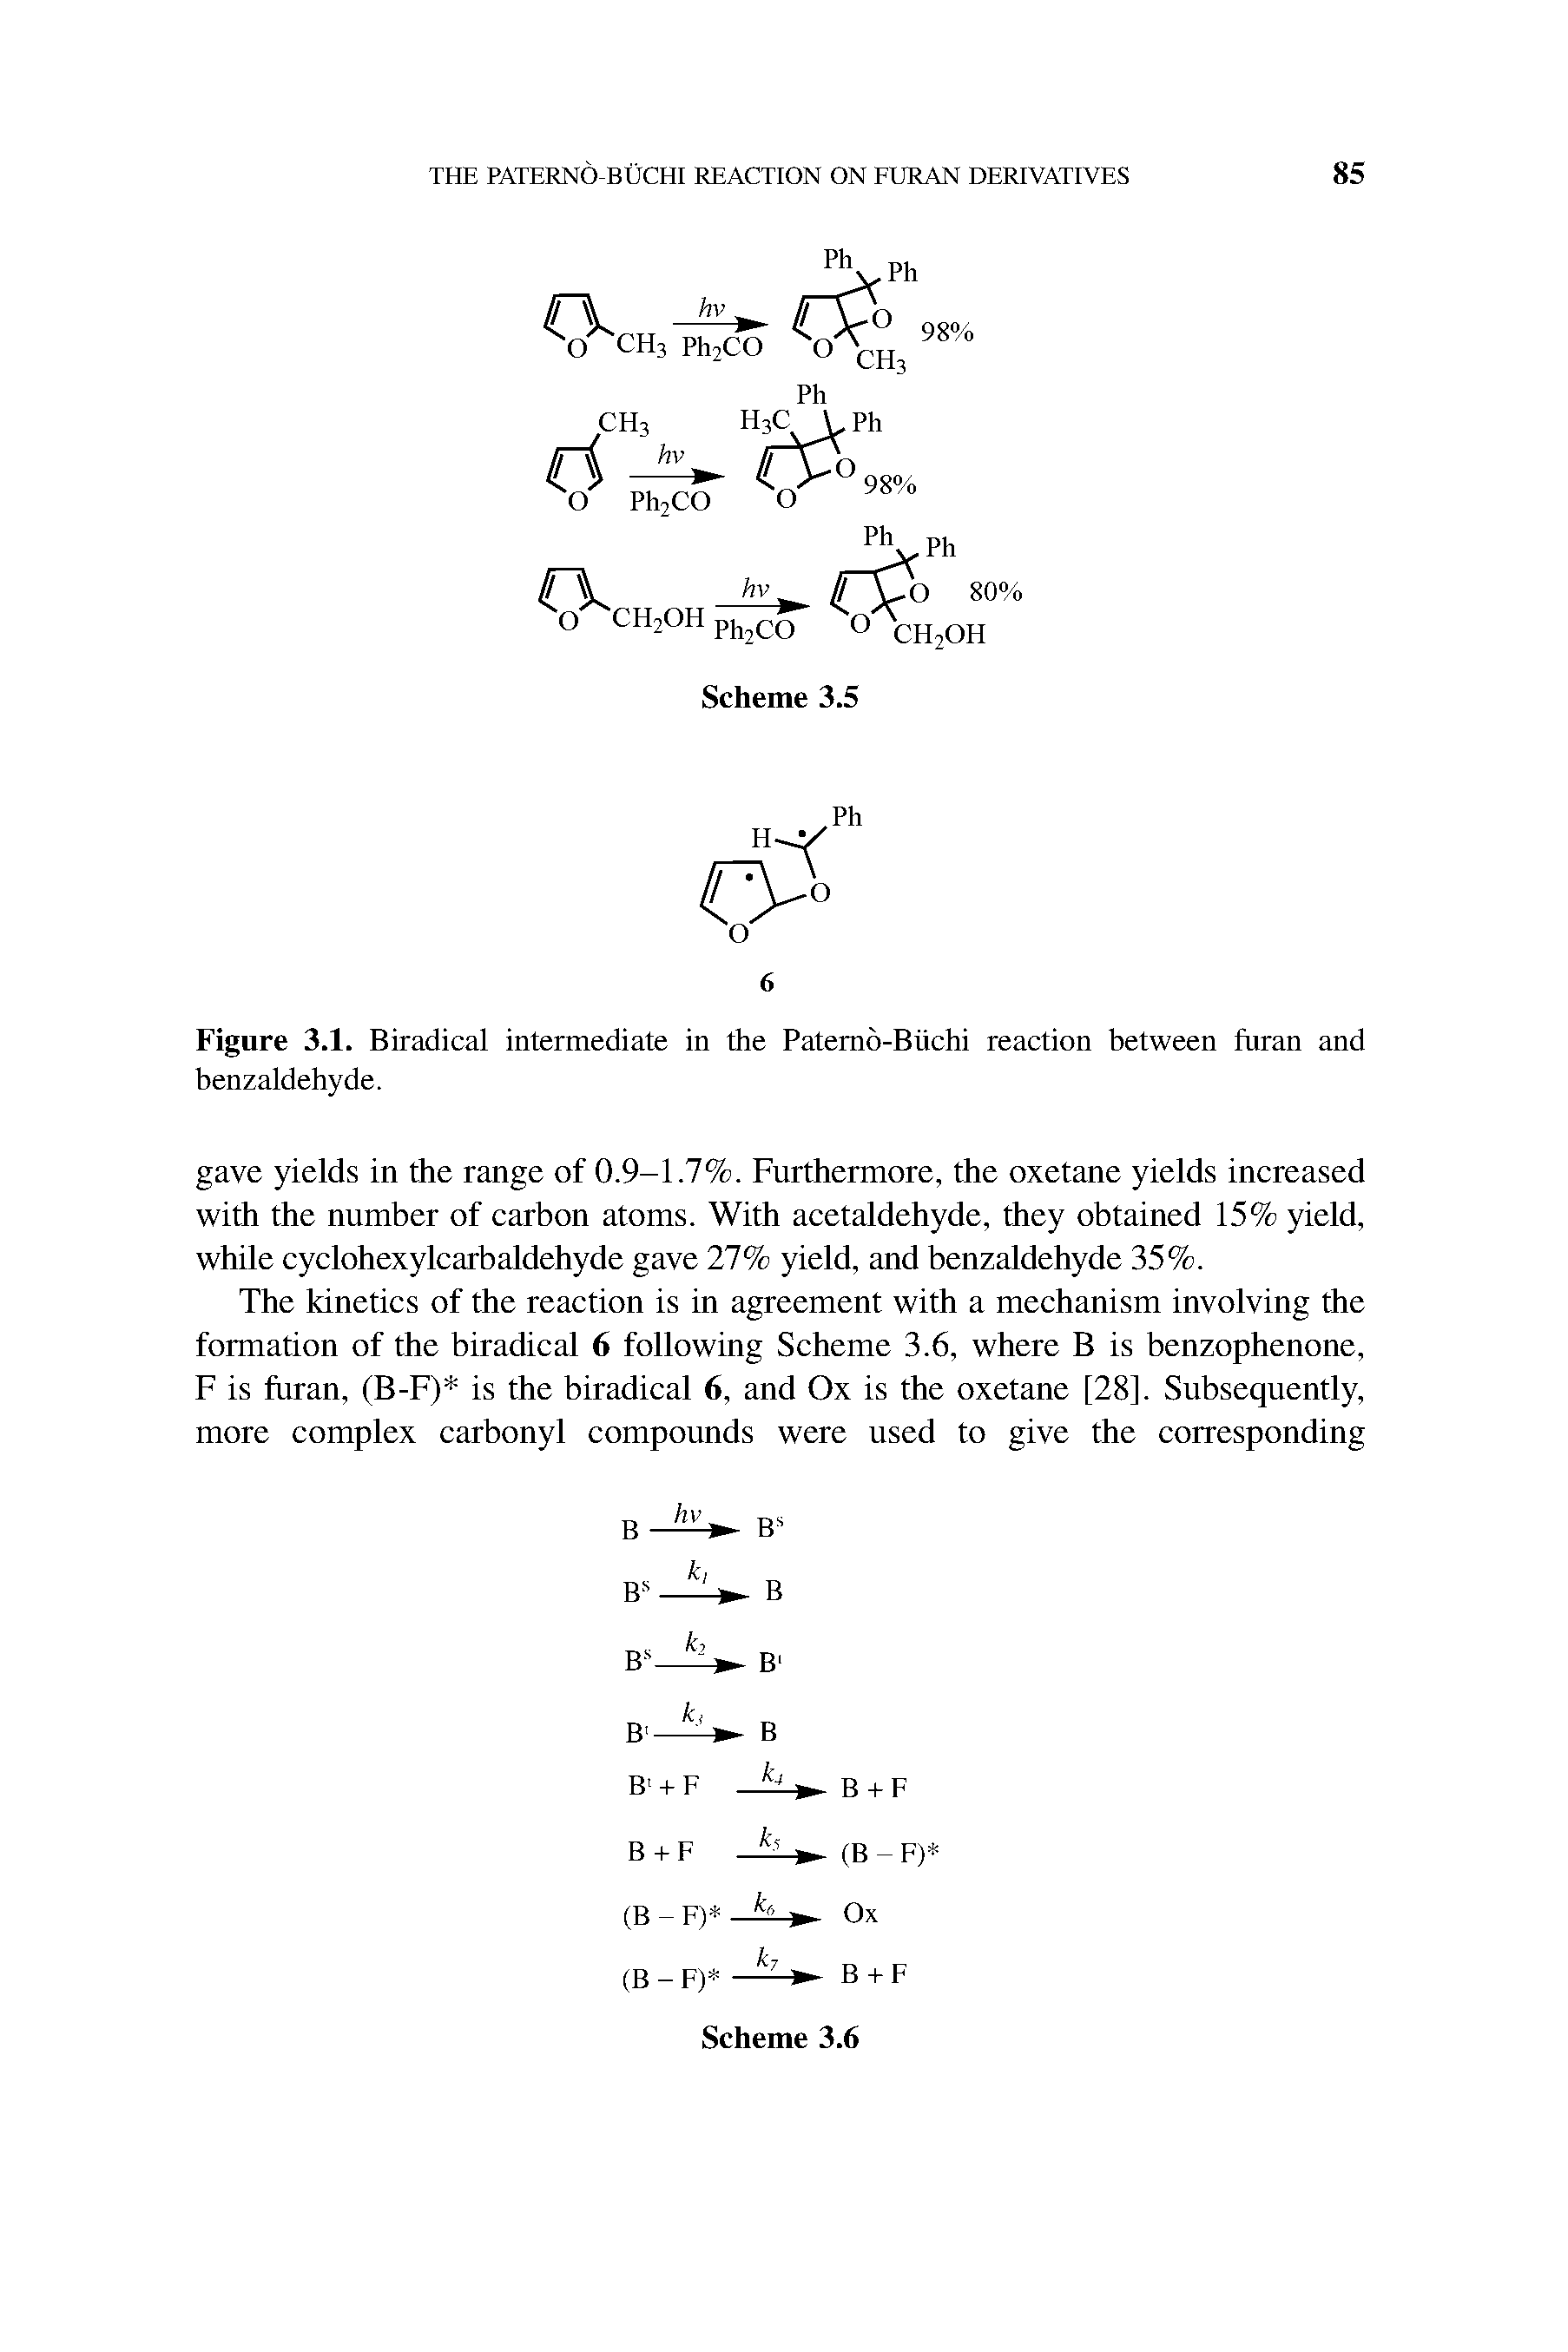 Figure 3.1. Biradical intermediate in the Patemo-Biichi reaction between furan and benzaldehyde.